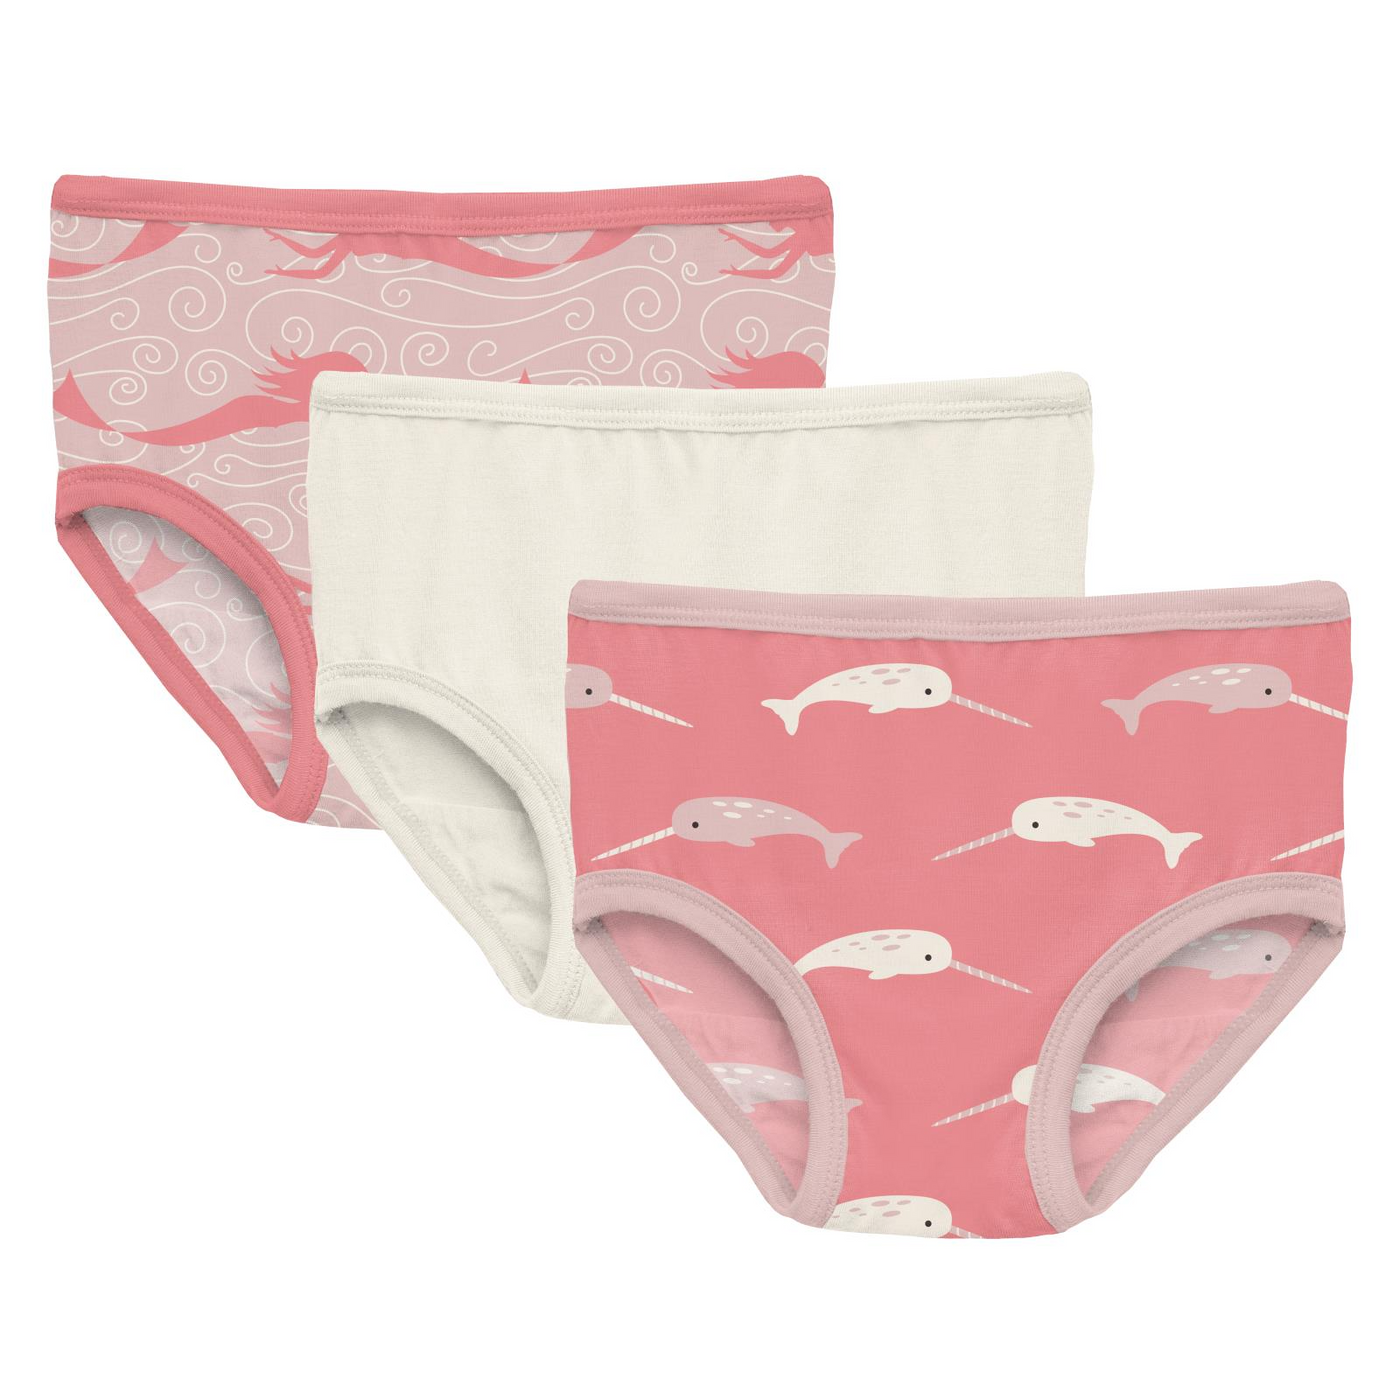 Kickee Pants Girl's Underwear Set of 3: Baby Rose Mermaid, Natural & Strawberry Narwhal